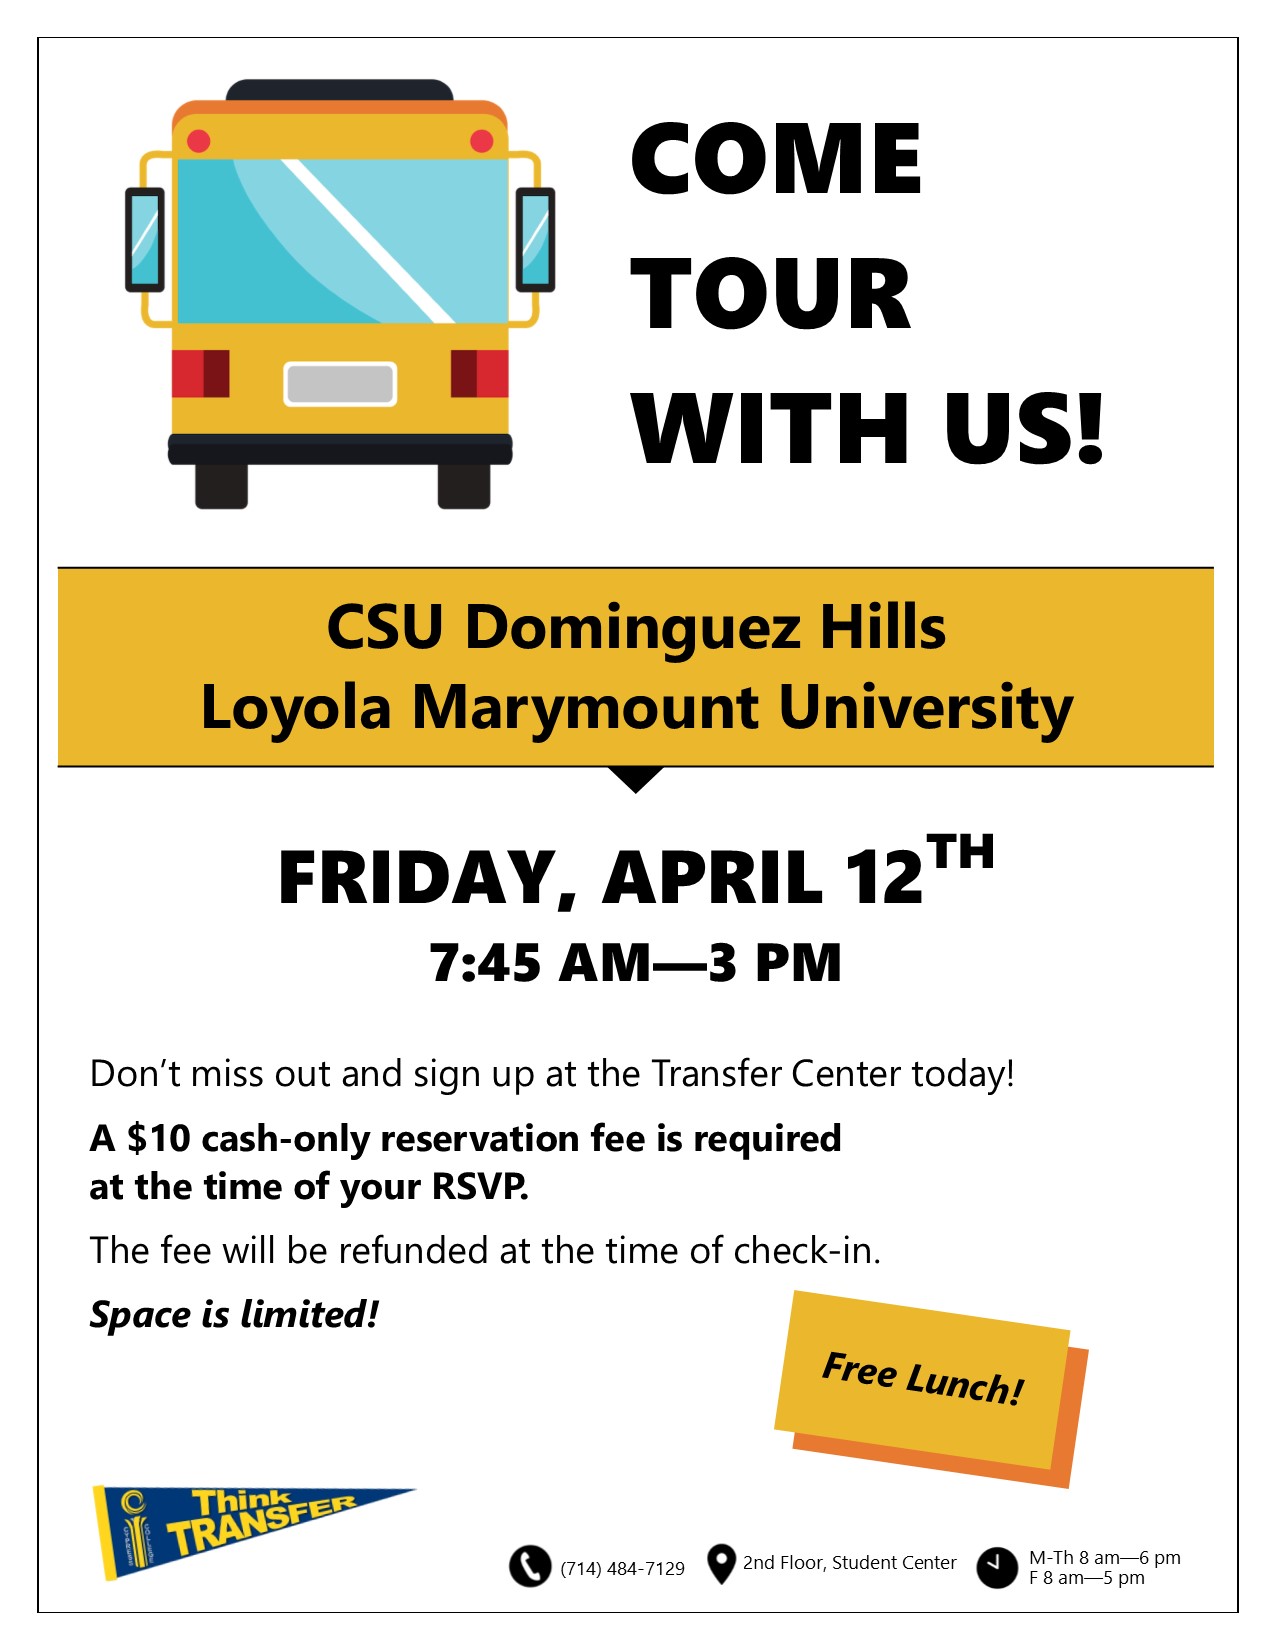 CSU Dominguez Hills/Loyola Marymount University Bus Tour flyer